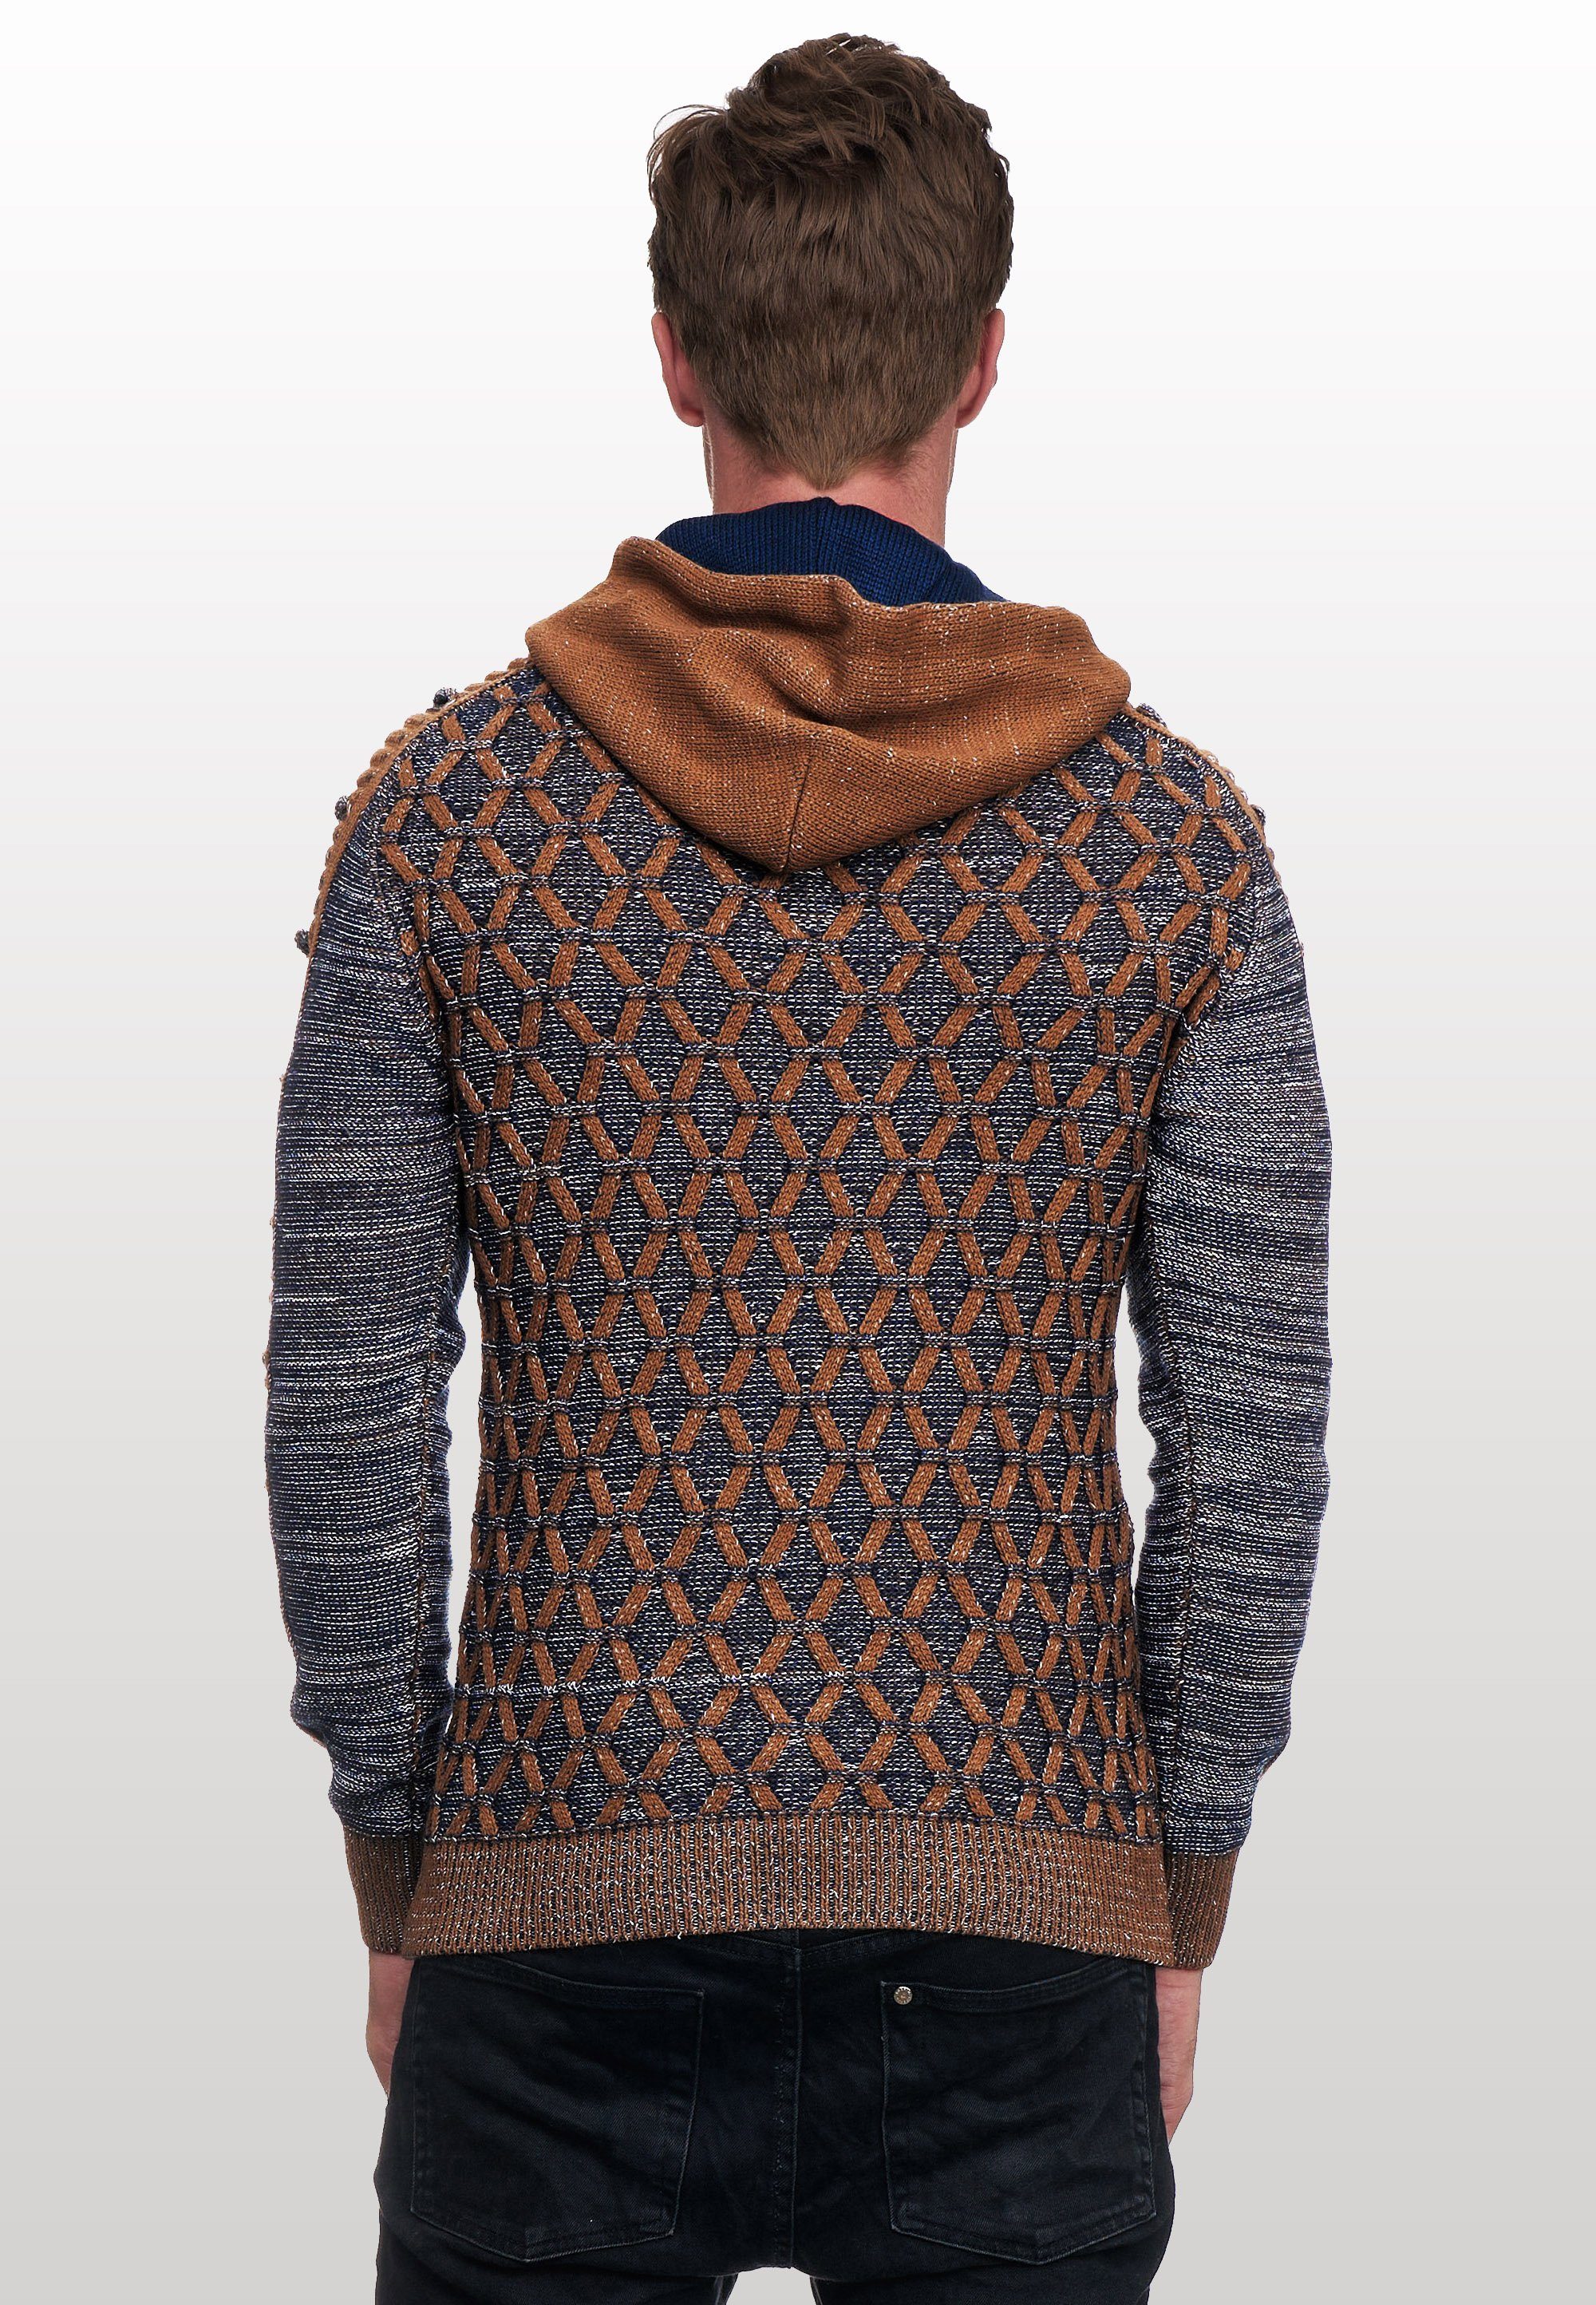 Rusty Neal Kapuzensweatshirt Design braun-grau ausgefallenem in